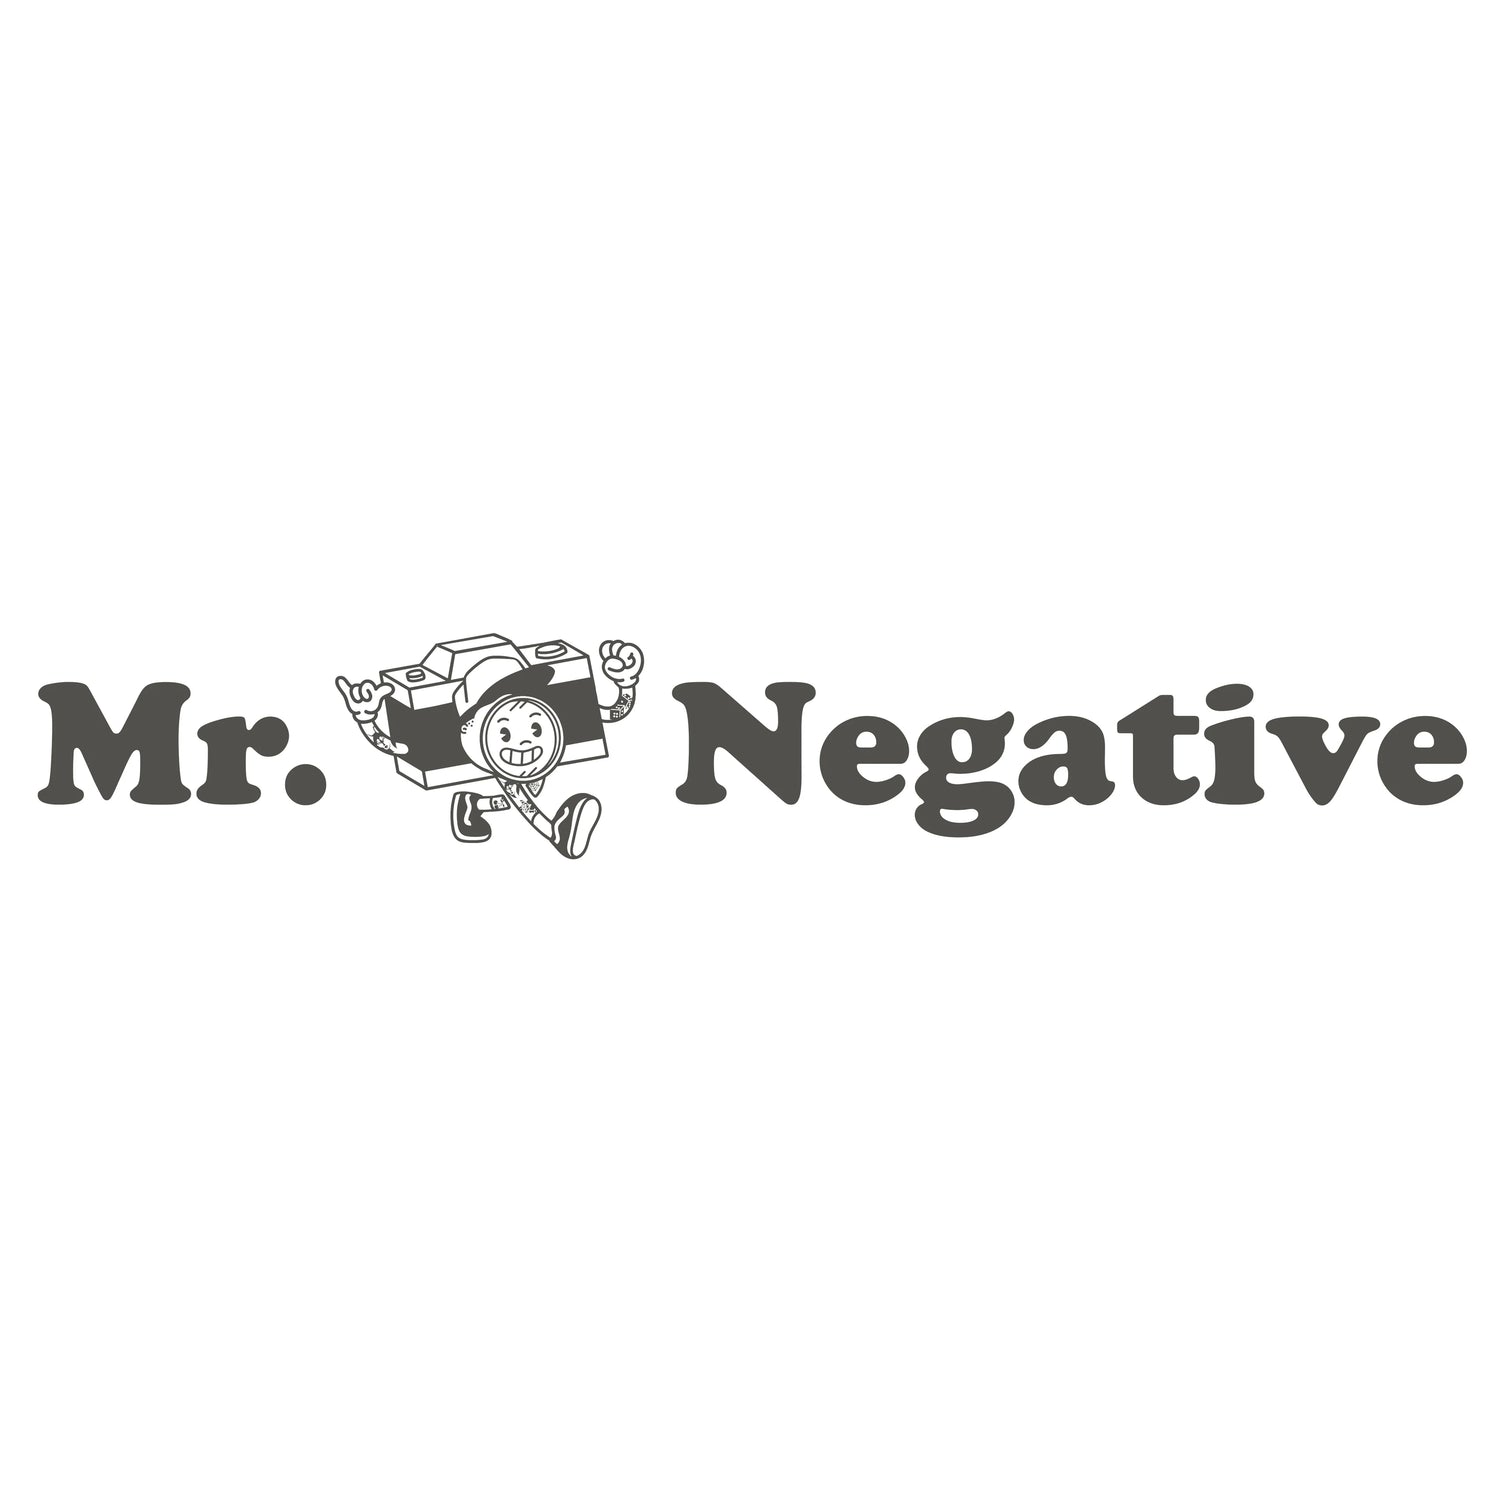 Mr. Negative